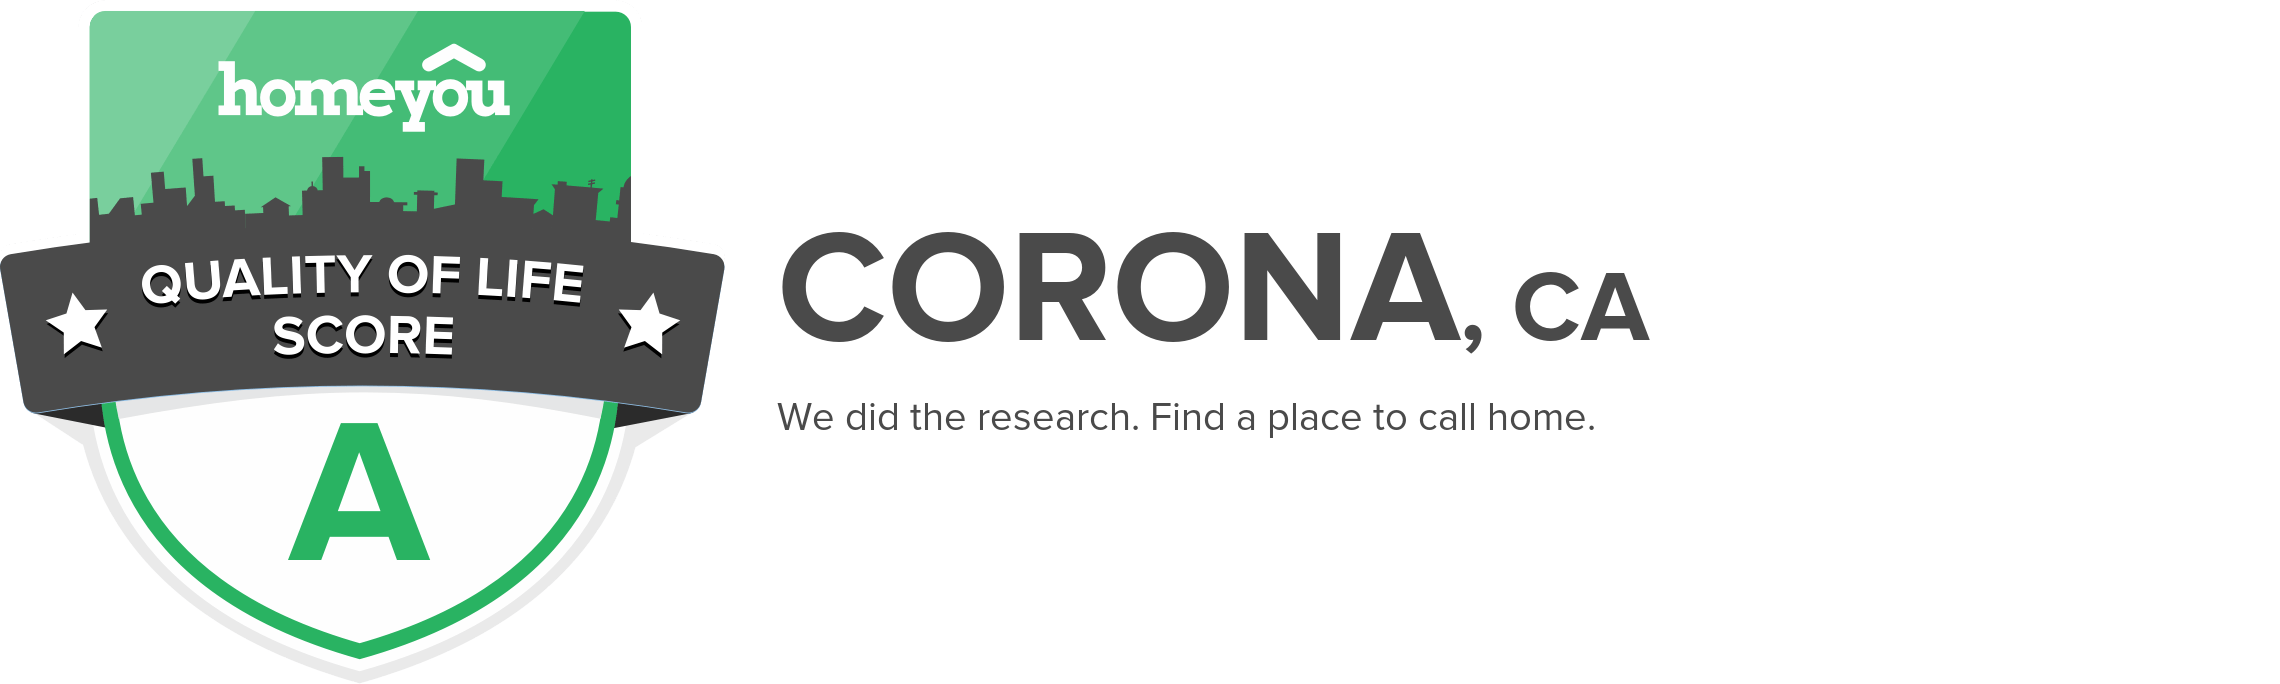 Corona, CA